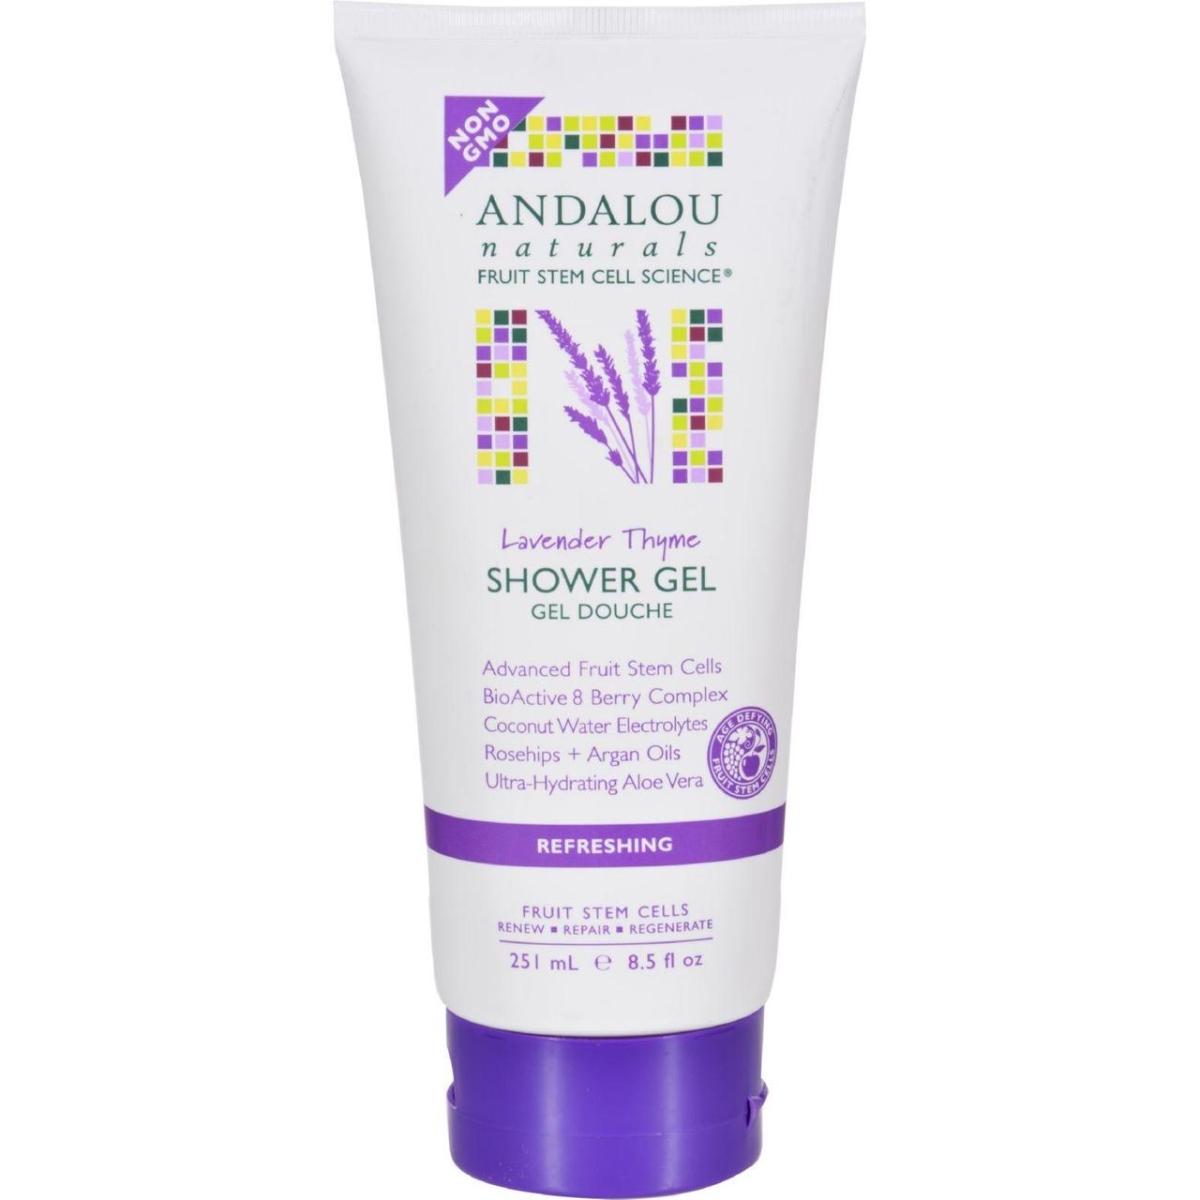 Hg1599547 8.5 Fl Oz Lavender Thyme Refreshing Shower Gel